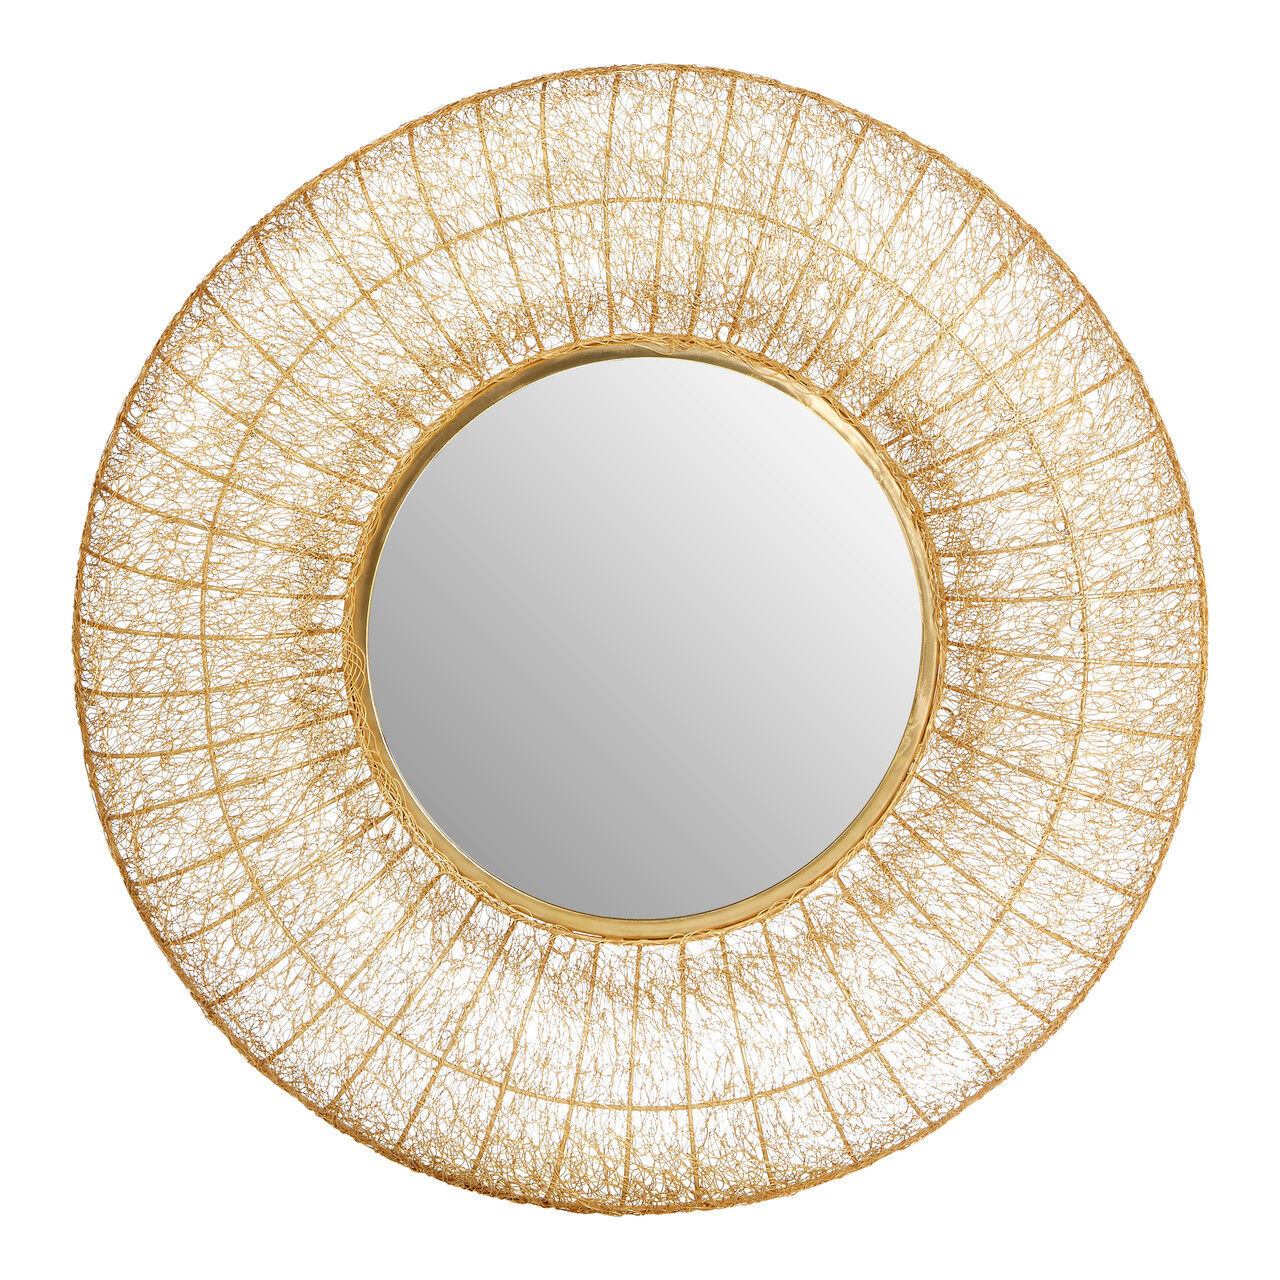 Sidari Wall Mirror   Gold